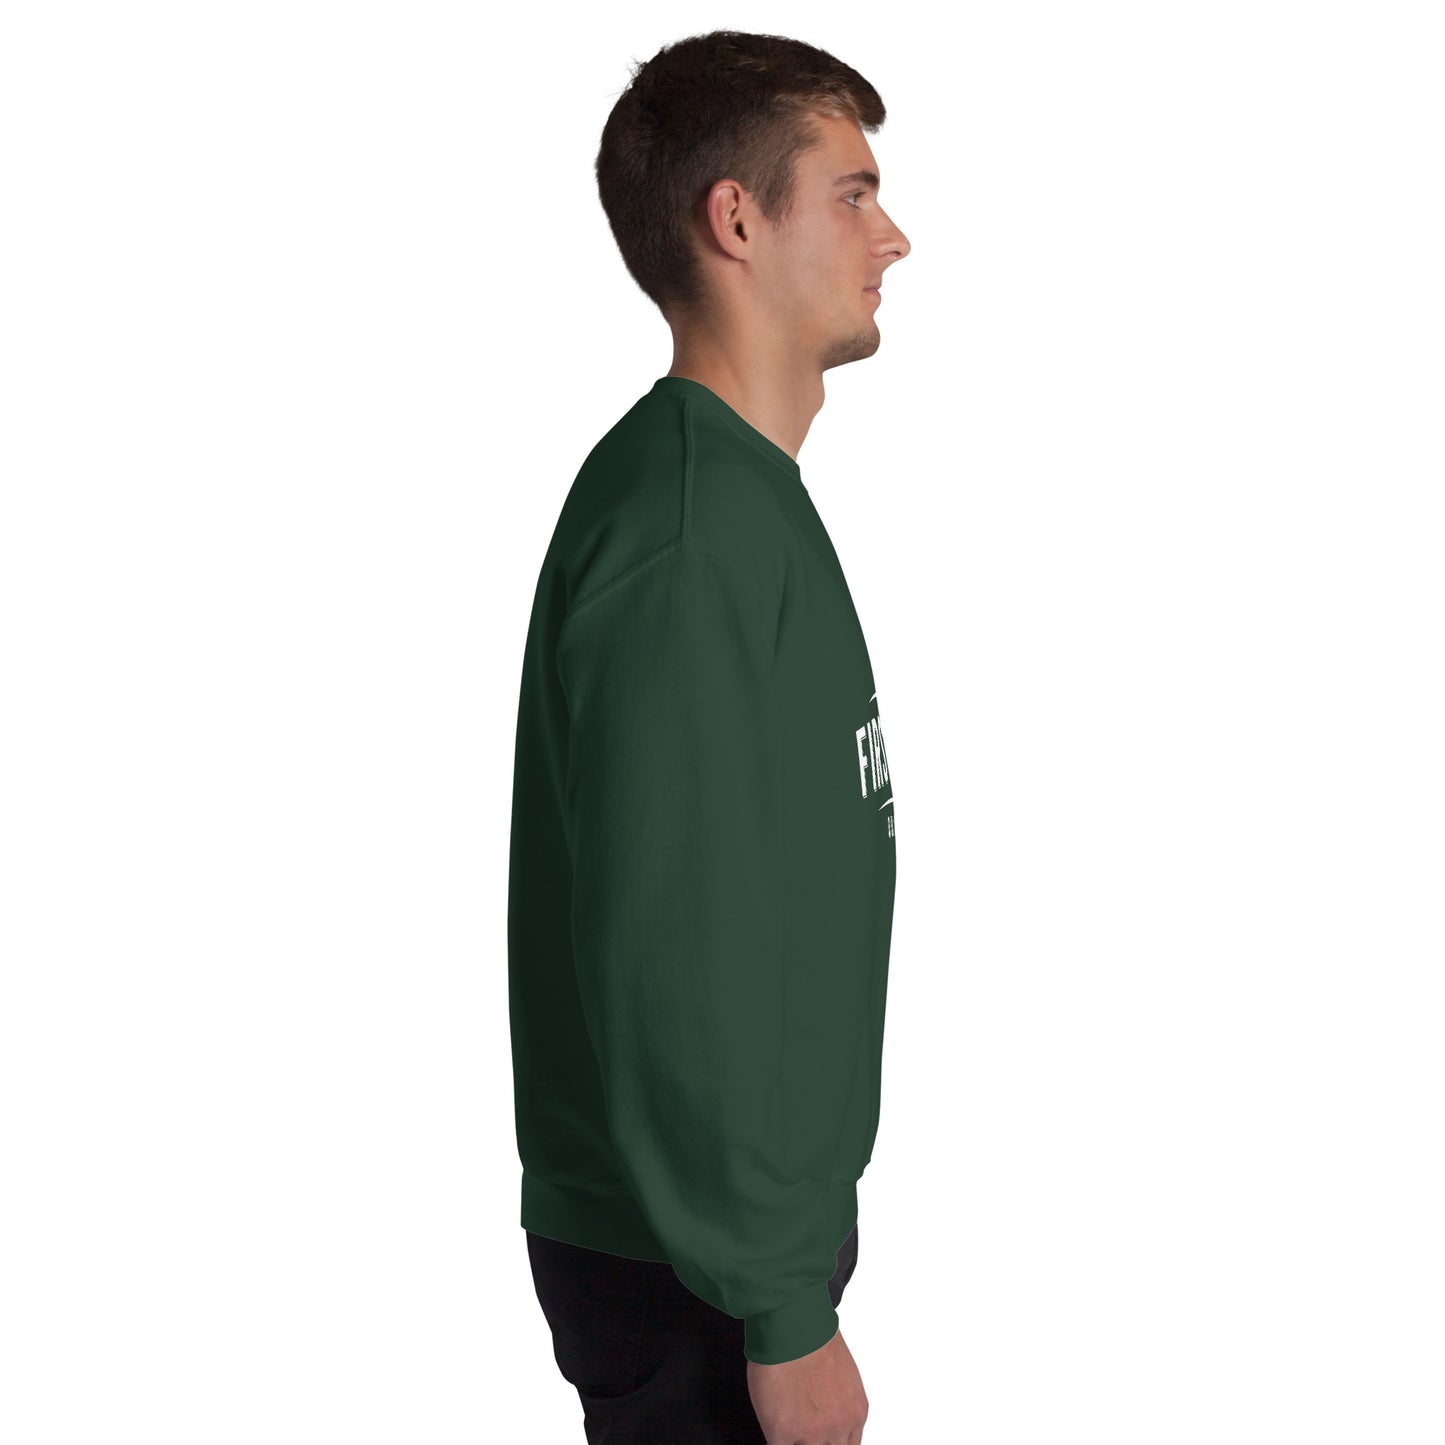 First Take - Printed Gildan Unisex Sweatshirt